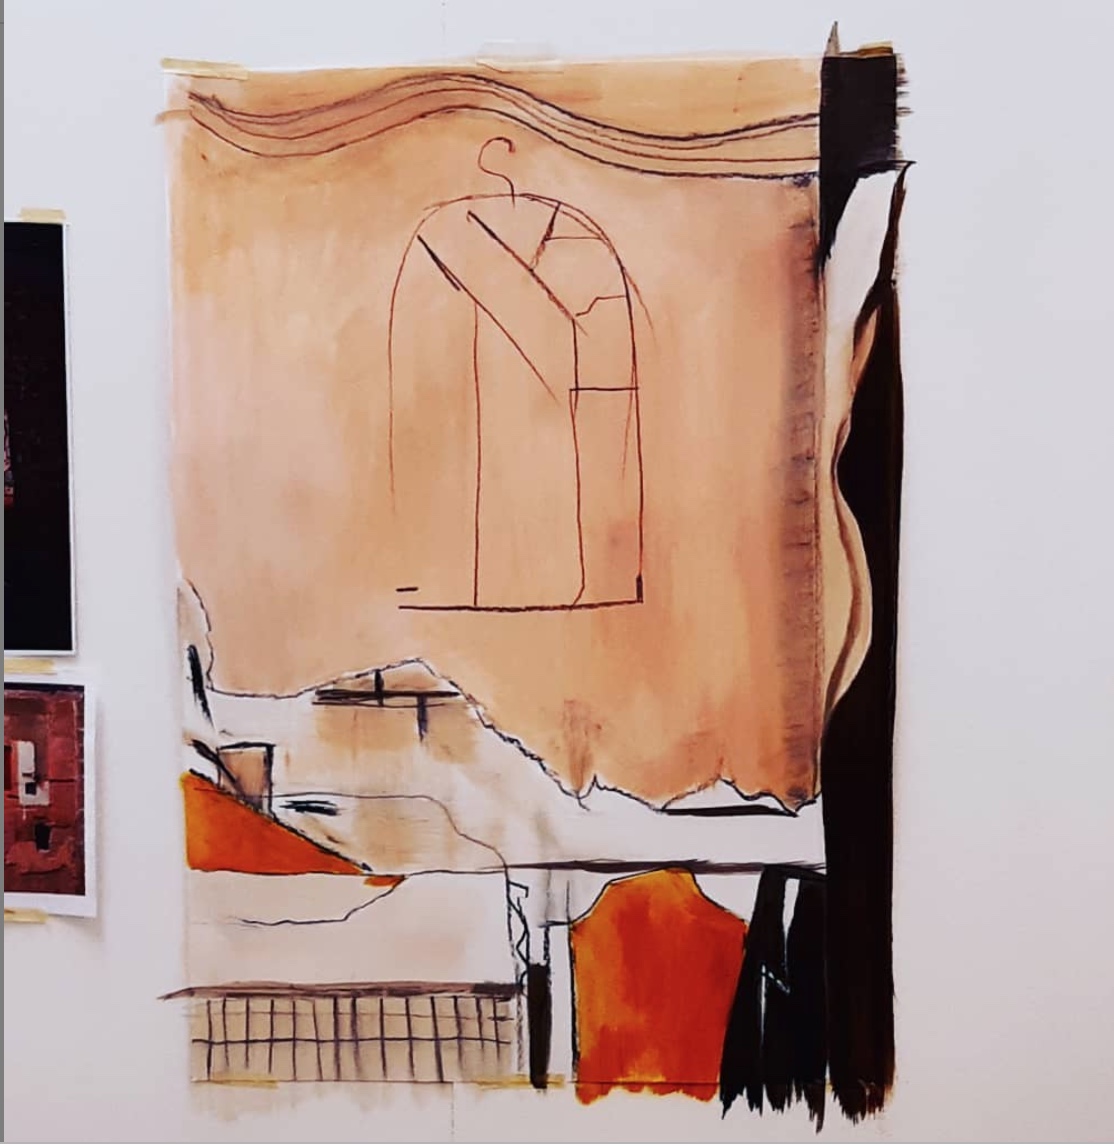 'Homage to Richard Diebenkorn' 'A La Richard Diebenkorn' Plaster wallbuilding site